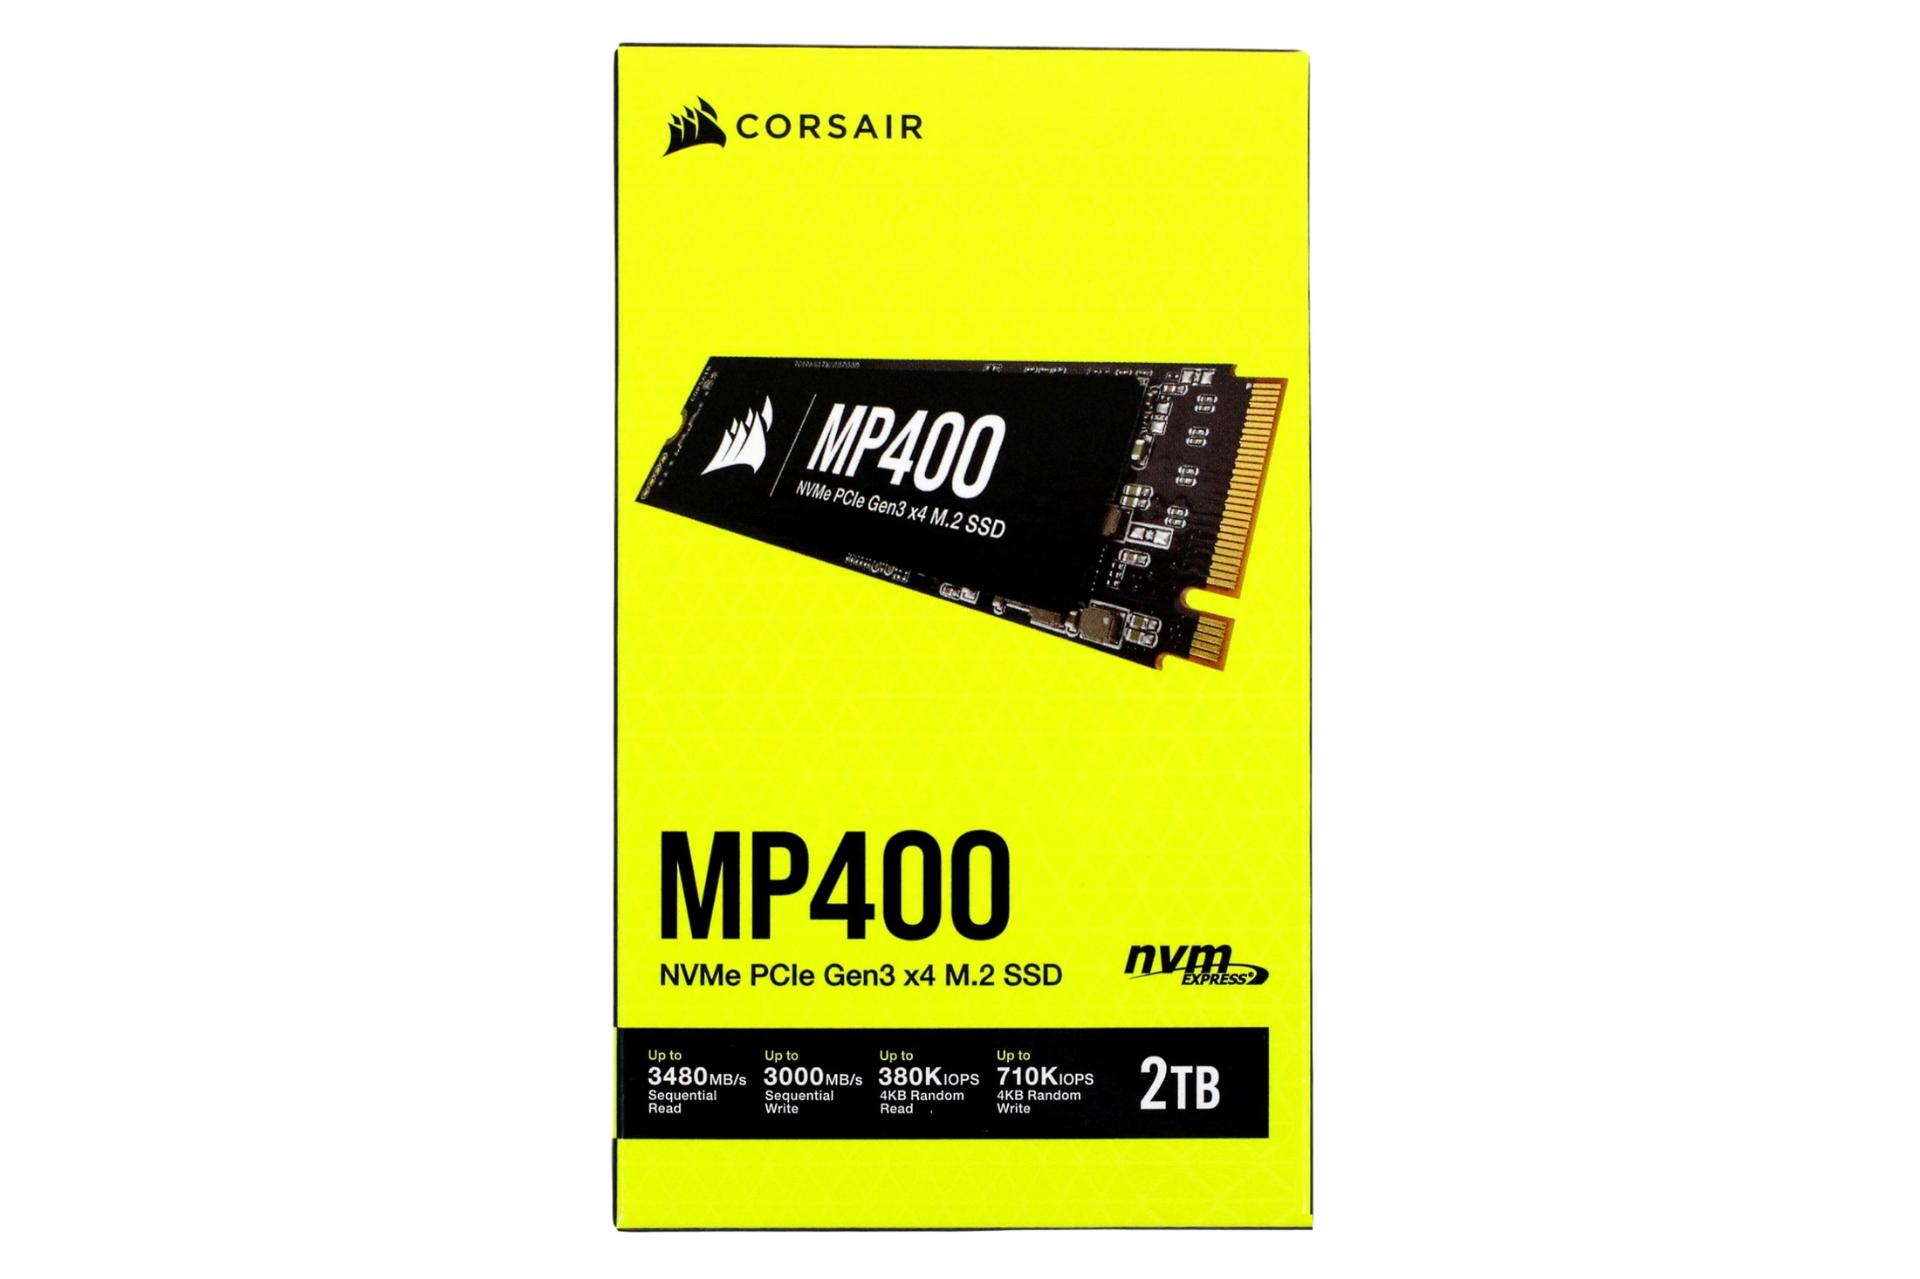 جعبه اس اس دی کورسیر MP400 NVMe M.2 ظرفیت 2 ترابایت